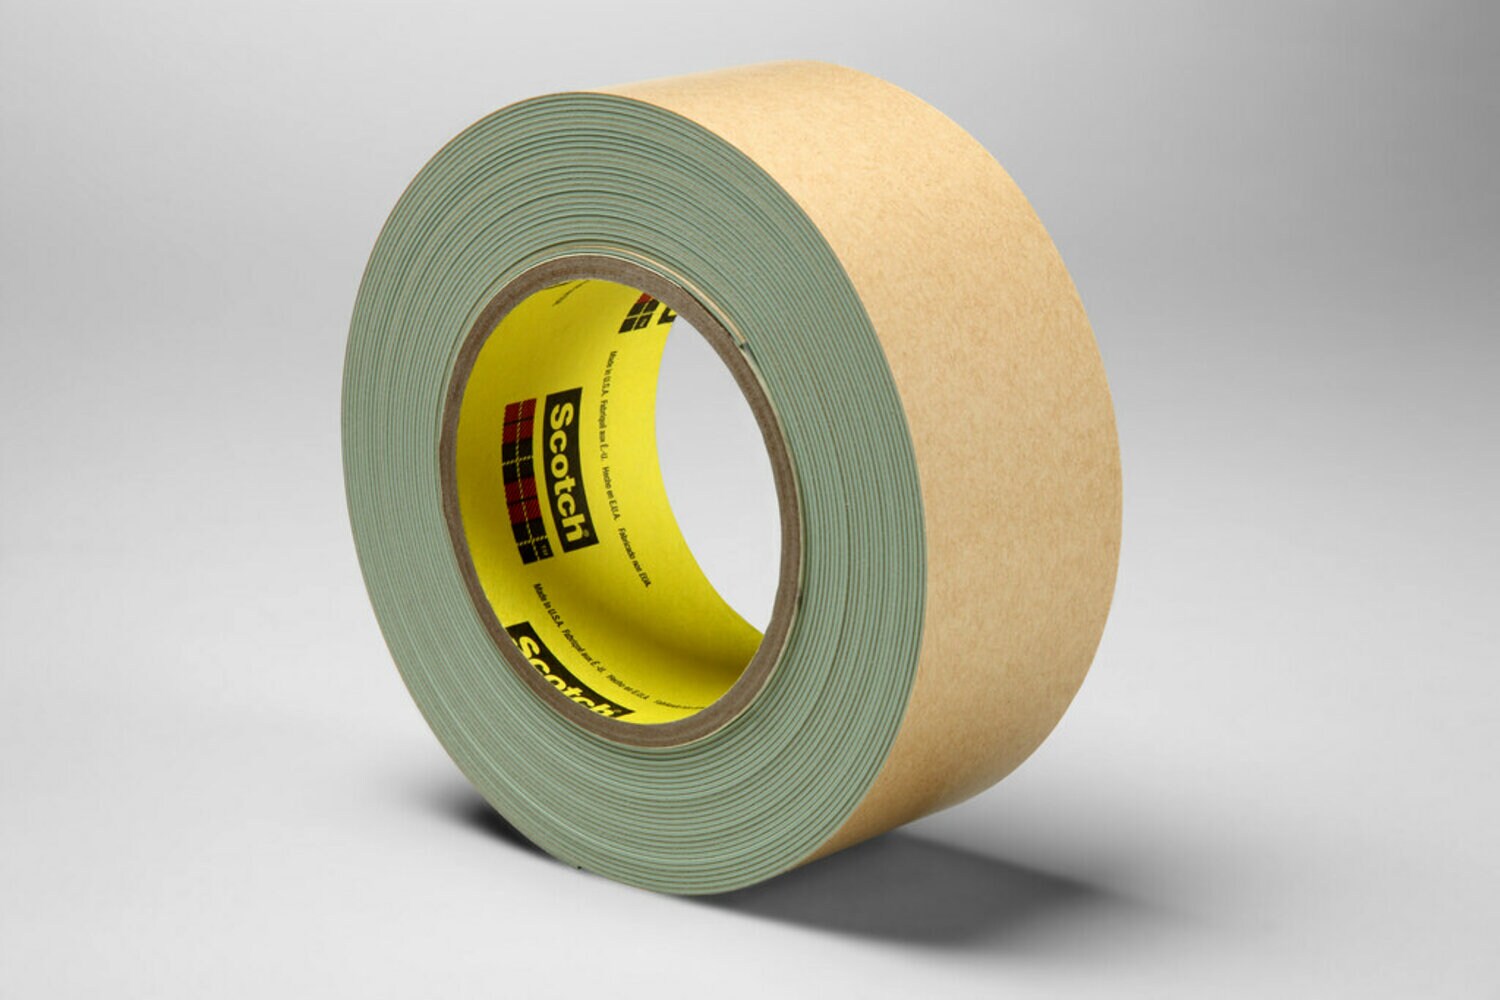 7000048743 - 3M Impact Stripping Tape 500, Green, 4 in x 10 yd, 36 mil, 2 rolls per
case